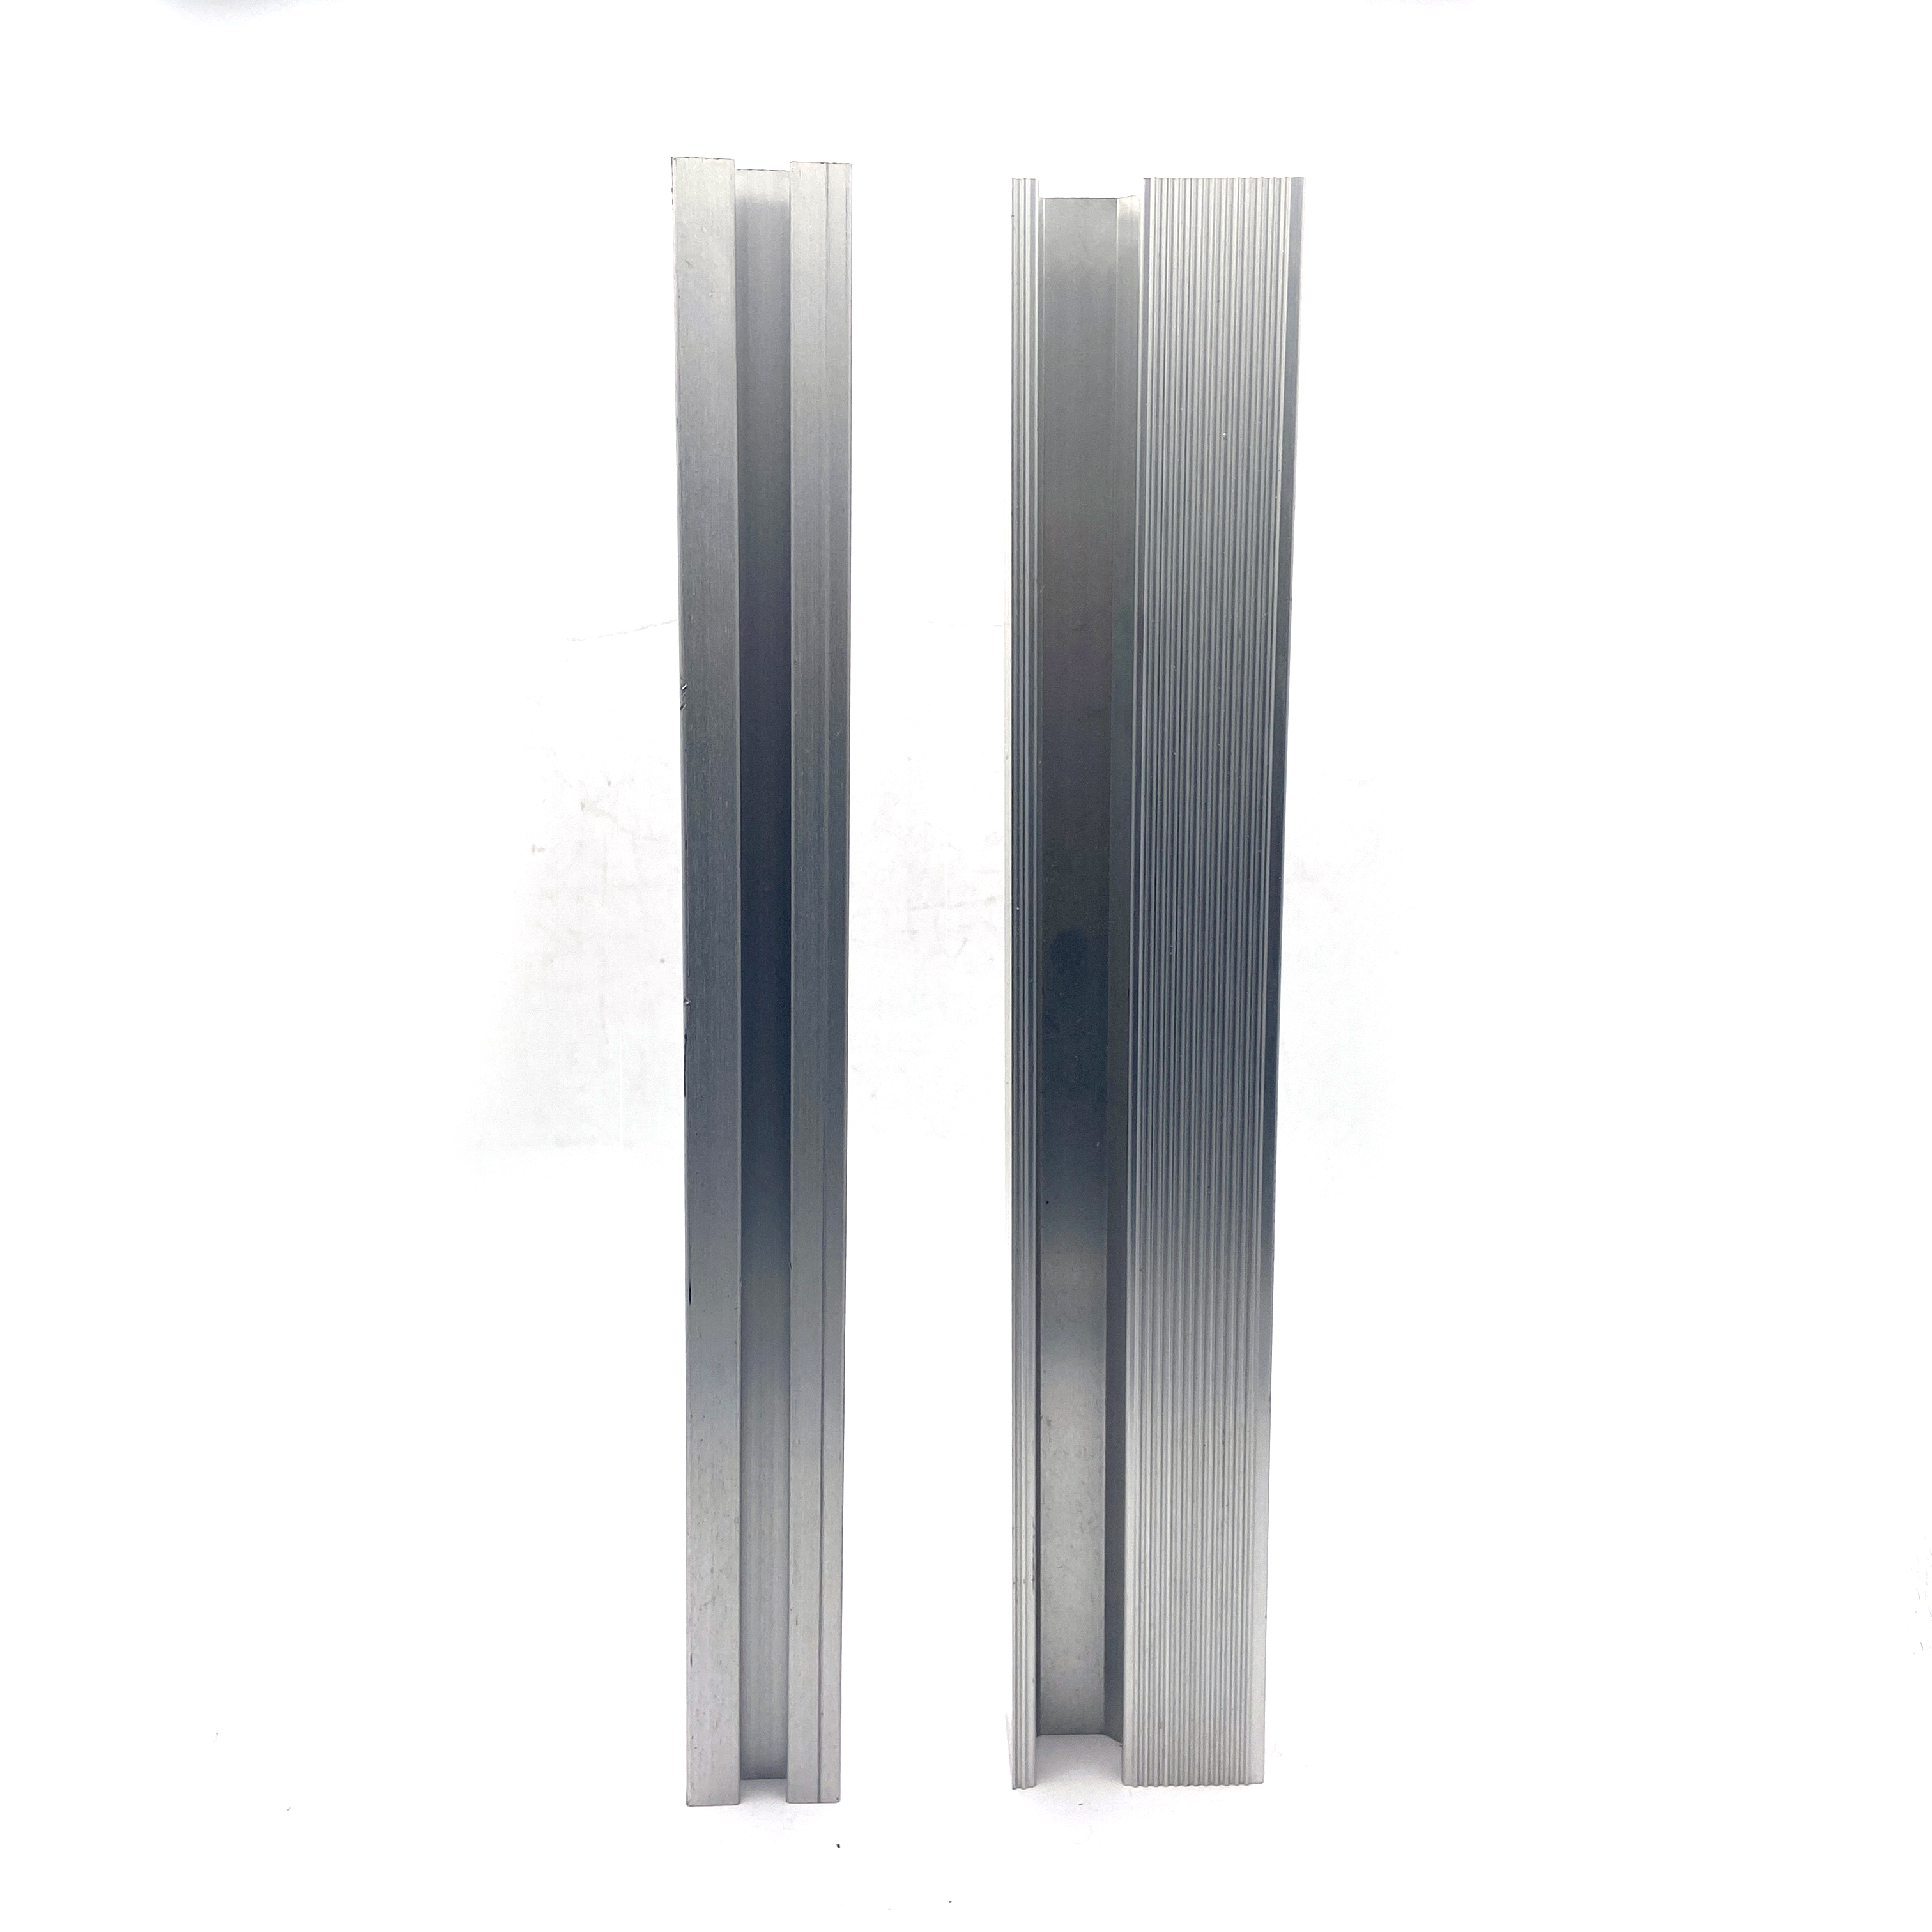 Extrudeuse 6063 Profil d'extrusion en aluminium anodisé en alliage en aluminium